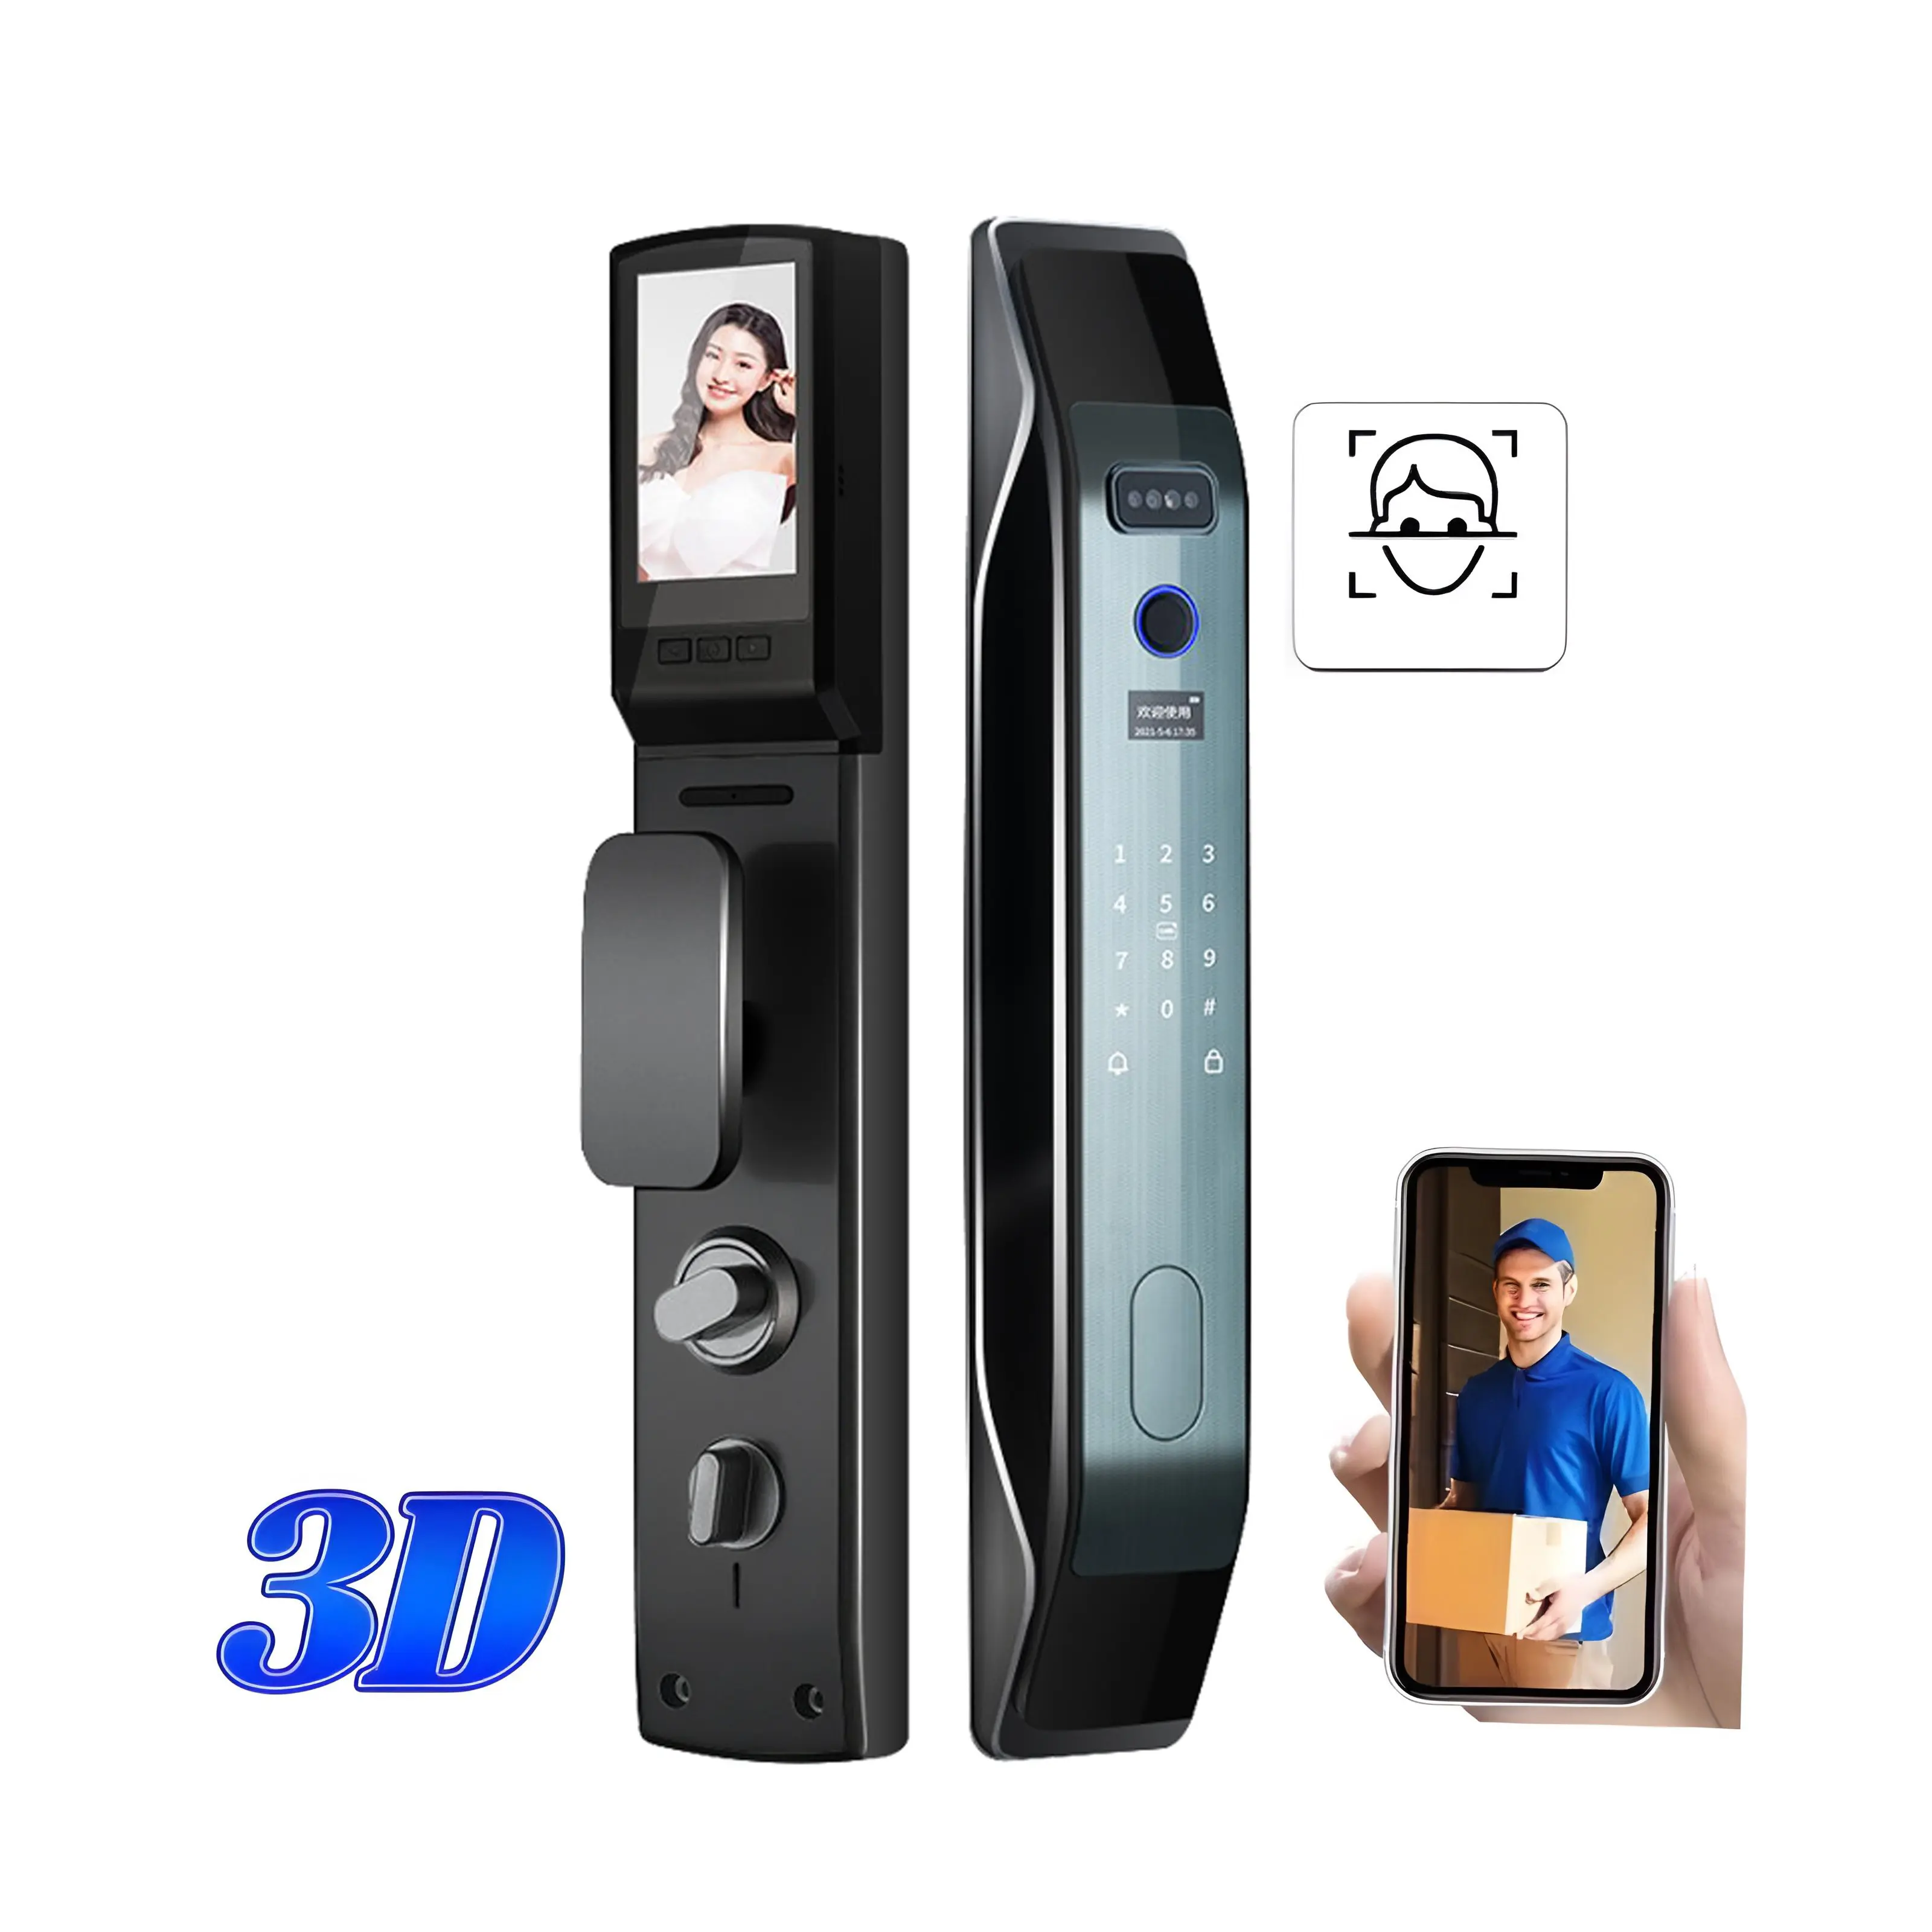 Goking Kunci Pintu Akses Pengenalan Wajah 3d Tiongkok Kualitas Tinggi Perangkat Sidik Jari Elektrik Kunci Digital Pintar Dropshipping